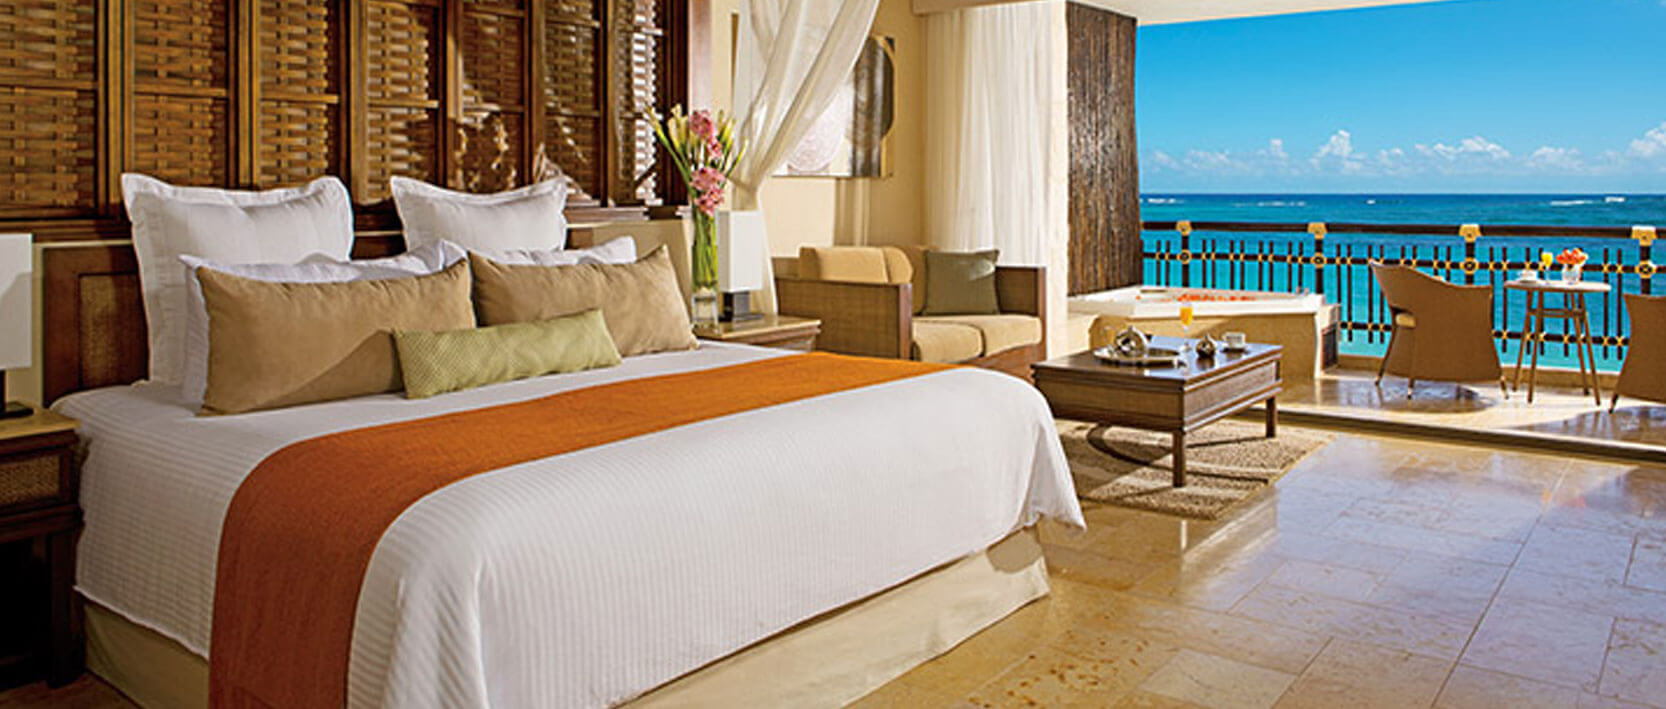 Dreams Riviera Cancun Resort Accommodations - Preferred Club Ocean Front Honeymoon Suite